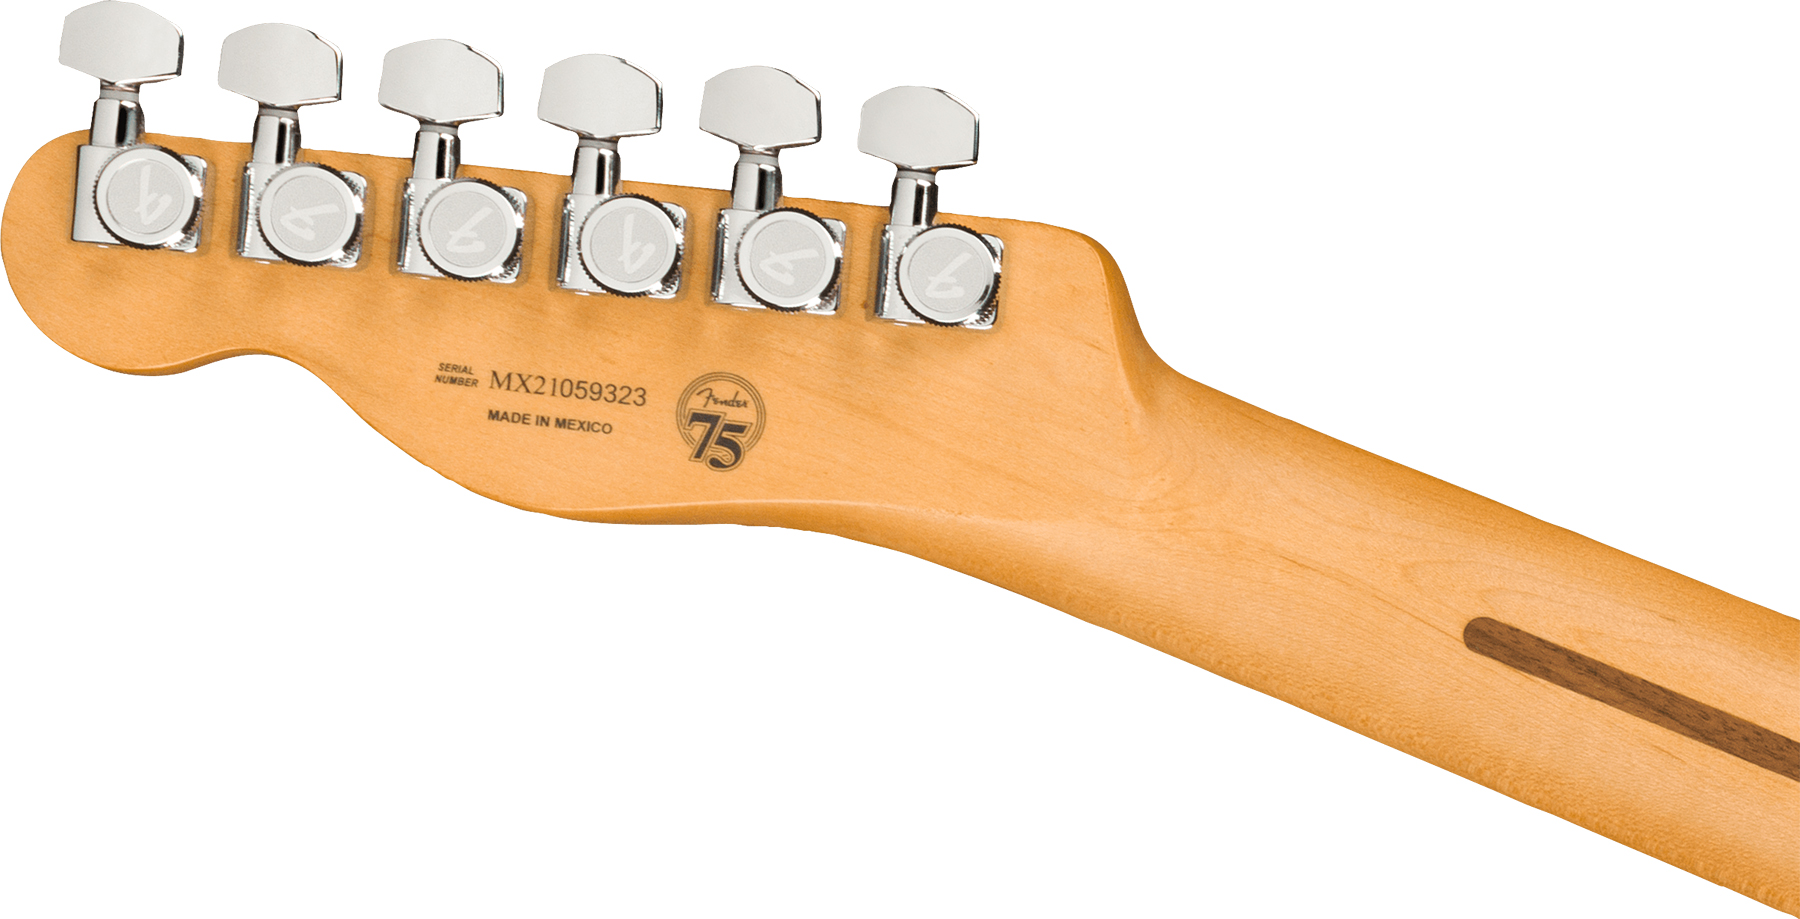 Fender Tele Player Plus Mex 2s Ht Mn - Aged Candy Apple Red - Guitarra eléctrica con forma de tel - Variation 3